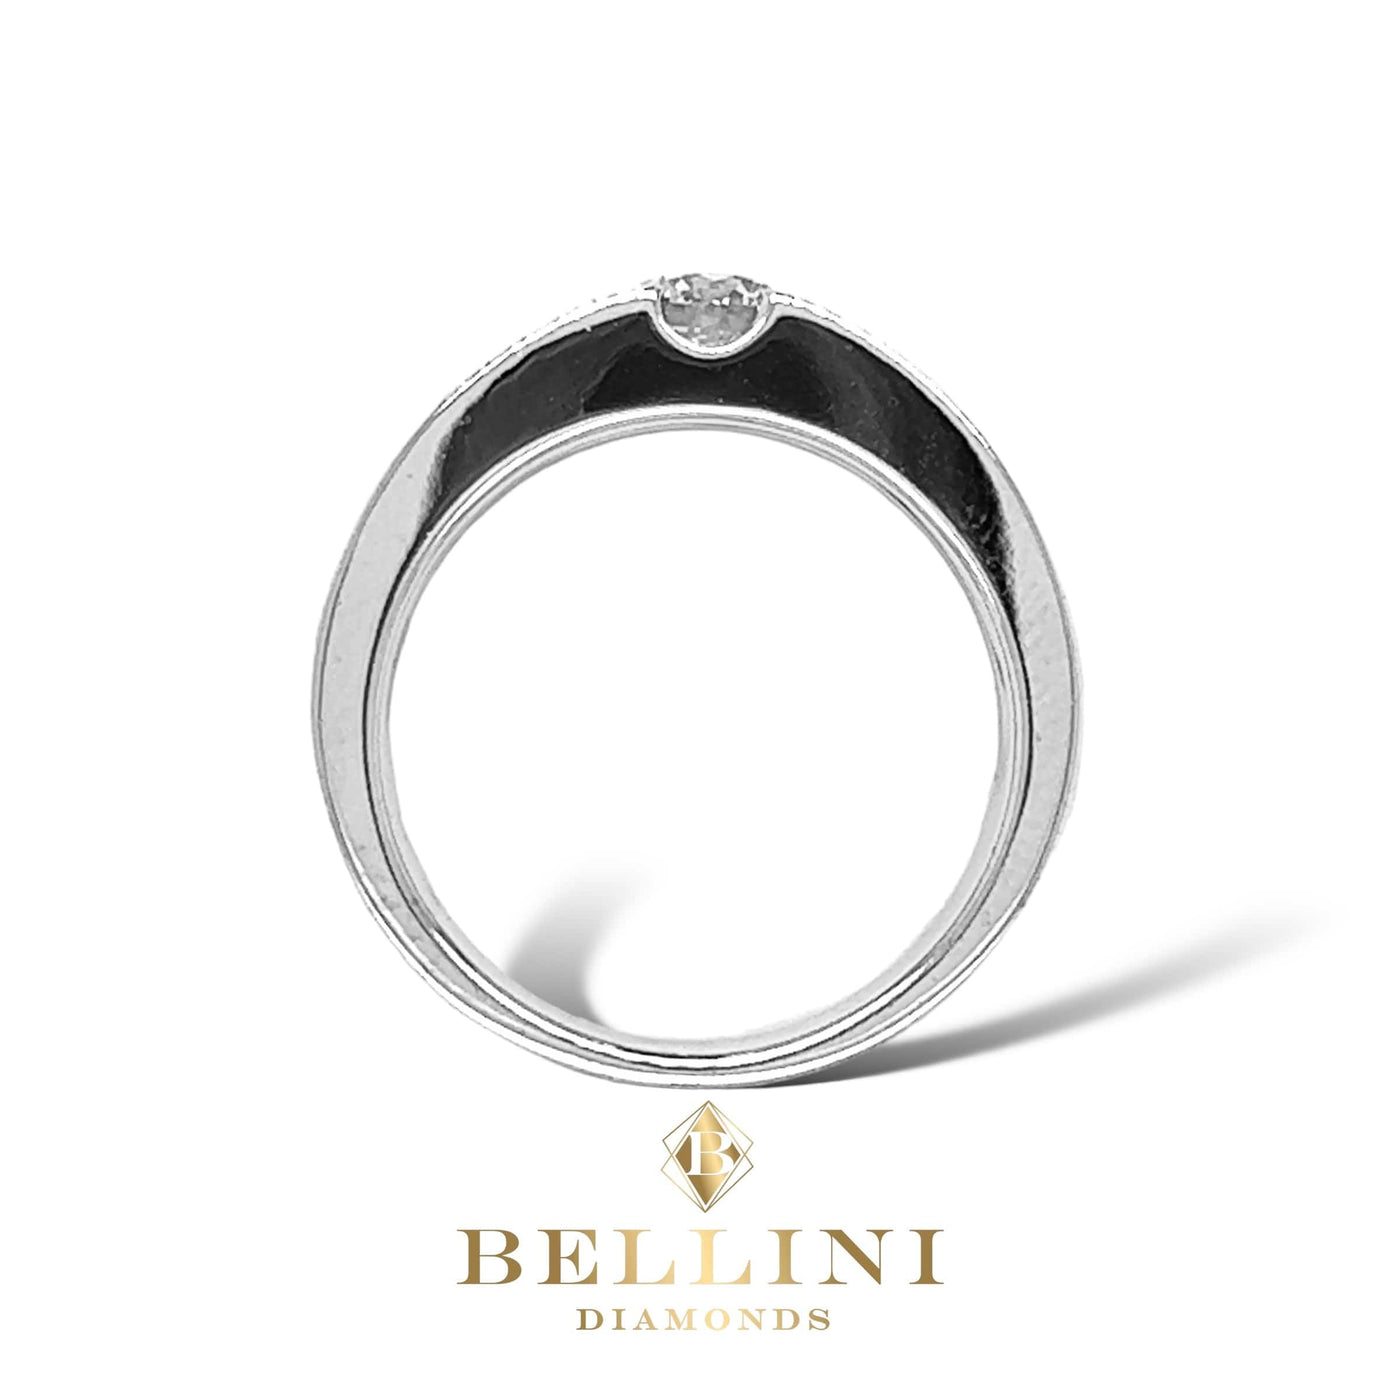 Bellini ring channel setting